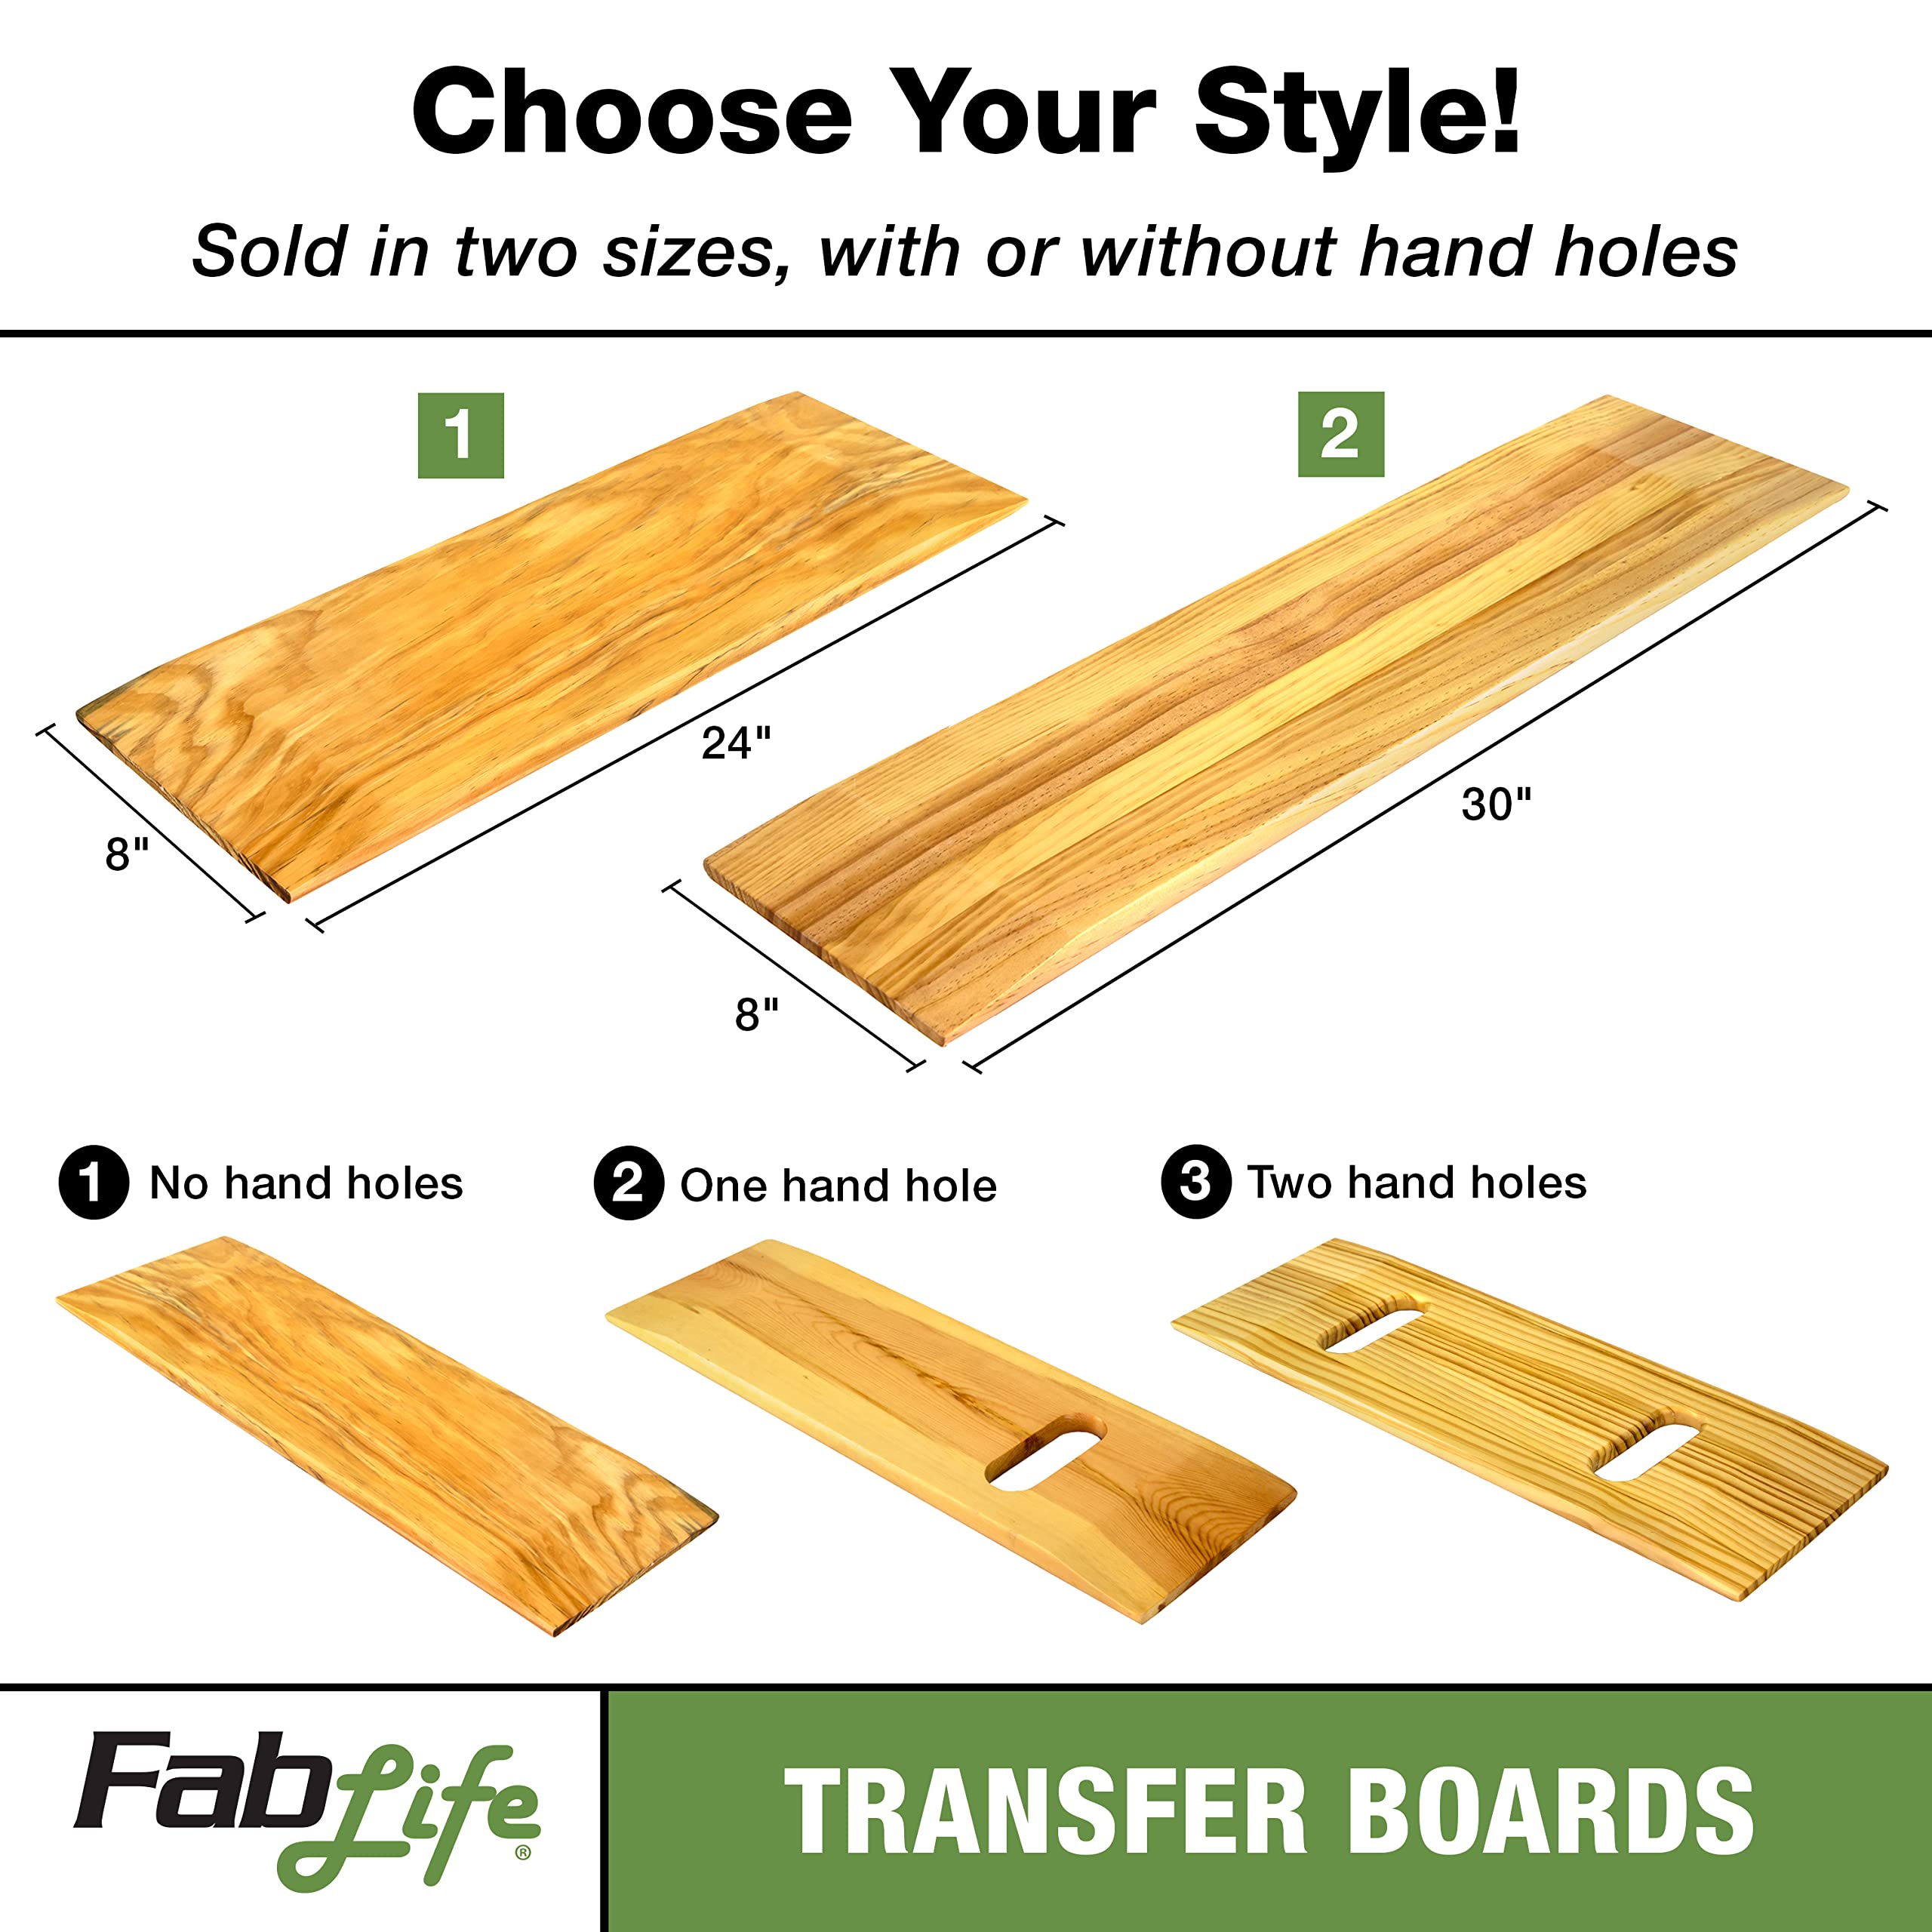 FabLife Deluxe Hardwood Transfer Board for Easy Patient Transfer, Slide Assist Device for Transportation, 2 Handgrips 8